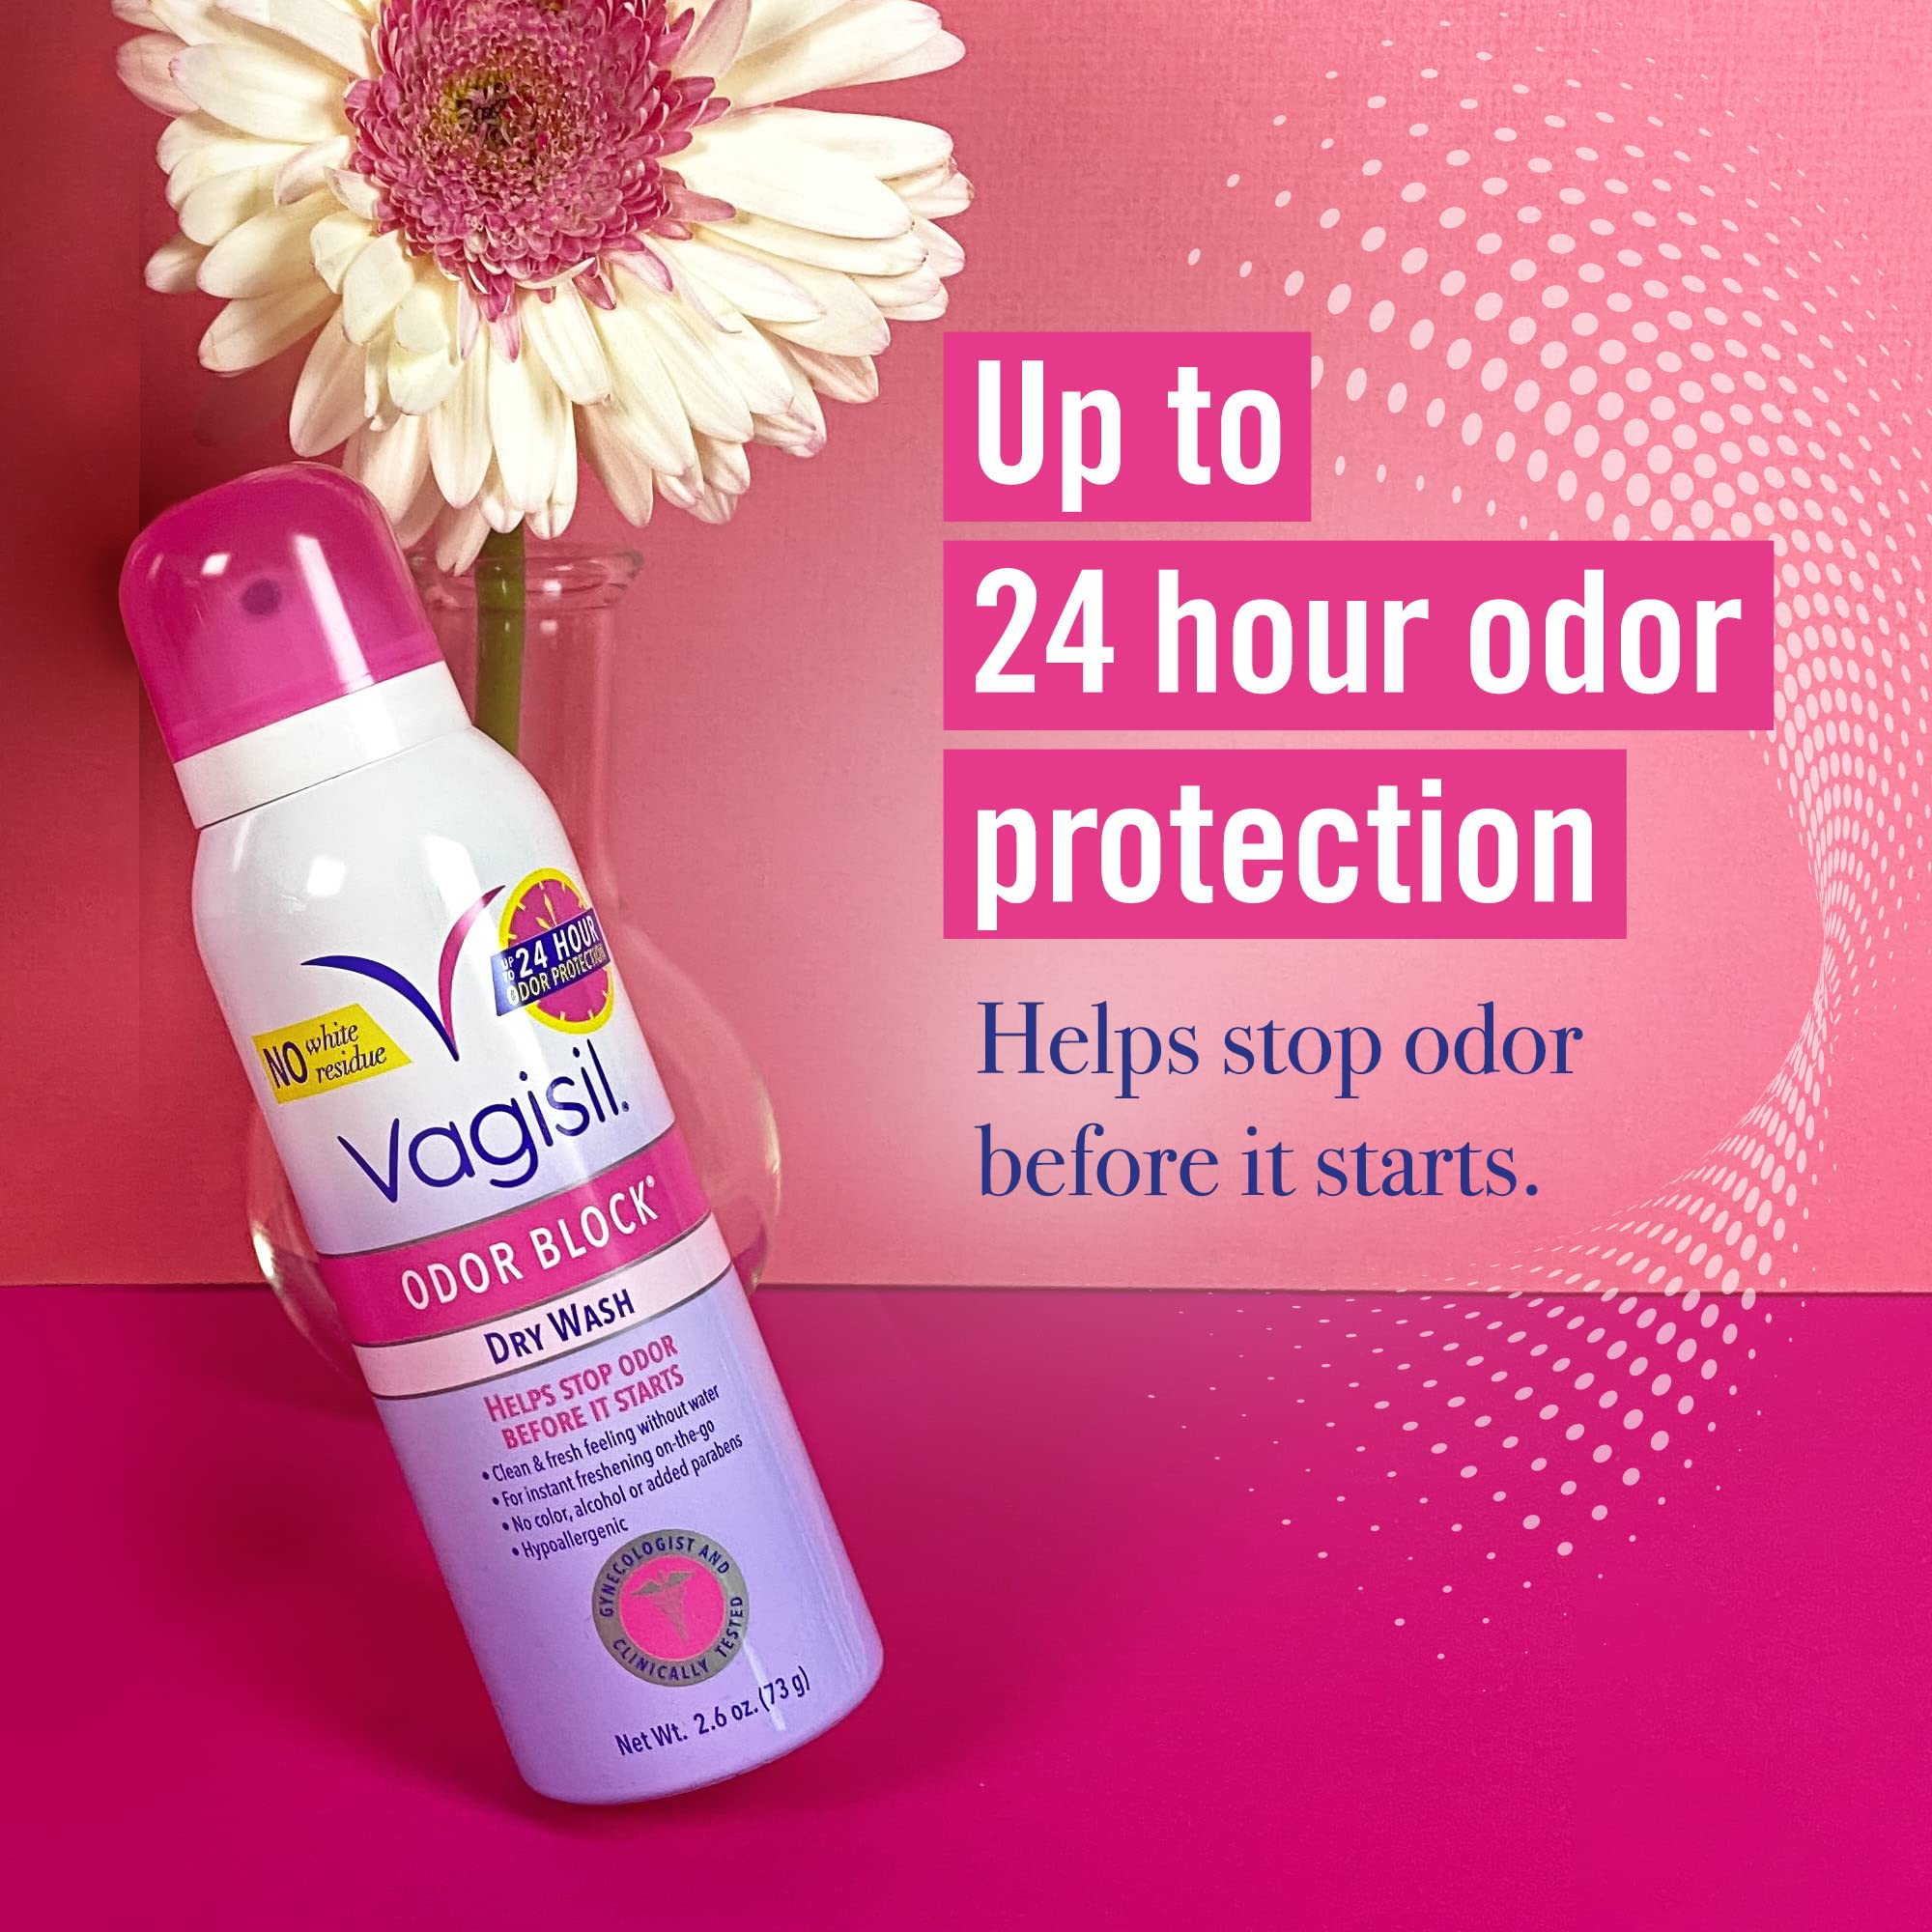 Vagisil Odor Block Dry Wash Spray for Feminine Hygiene, Gynecologist Tested, Hypoallergenic, 2.6 Ounces (Pack of 1)